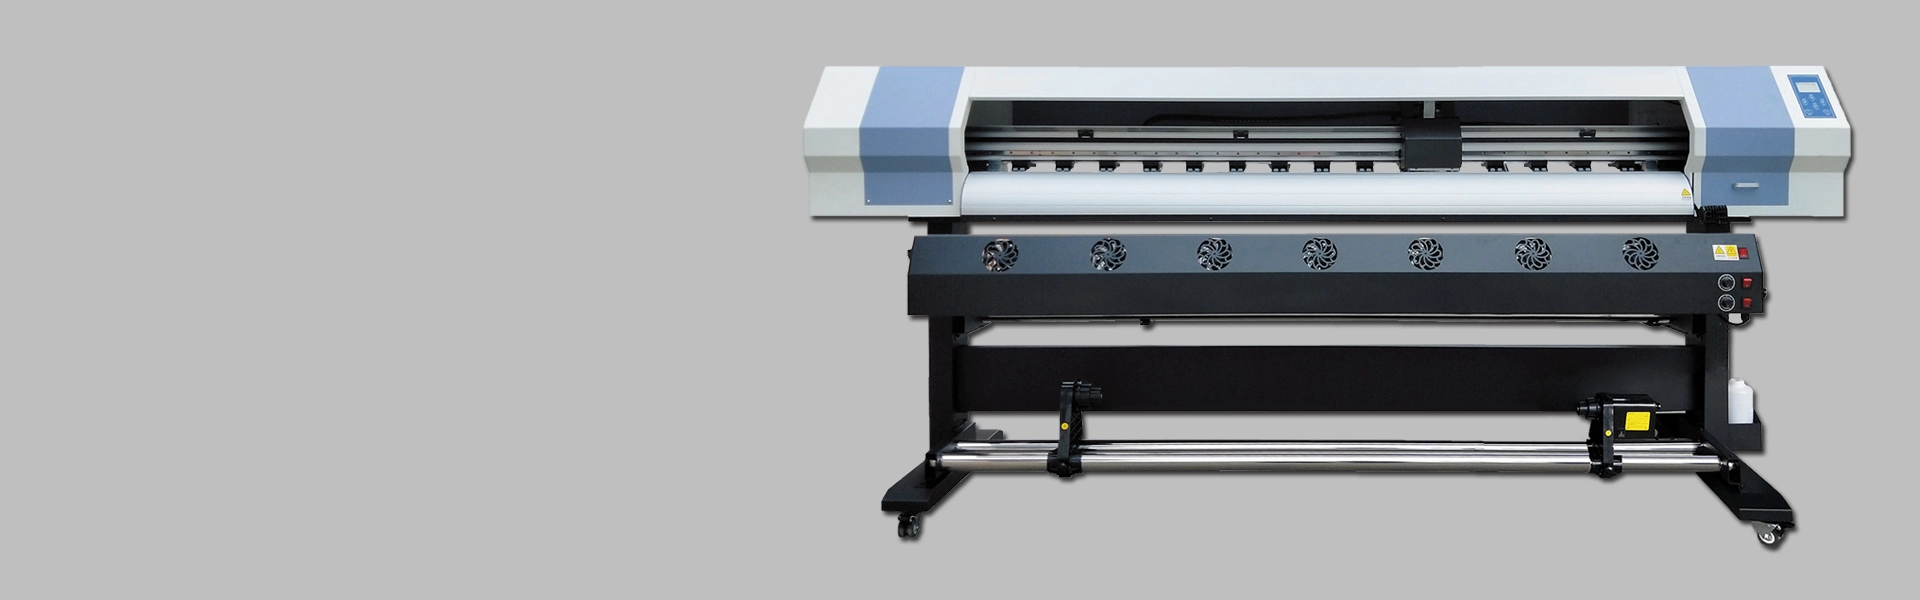 Impressora XP600 de 1,6 m